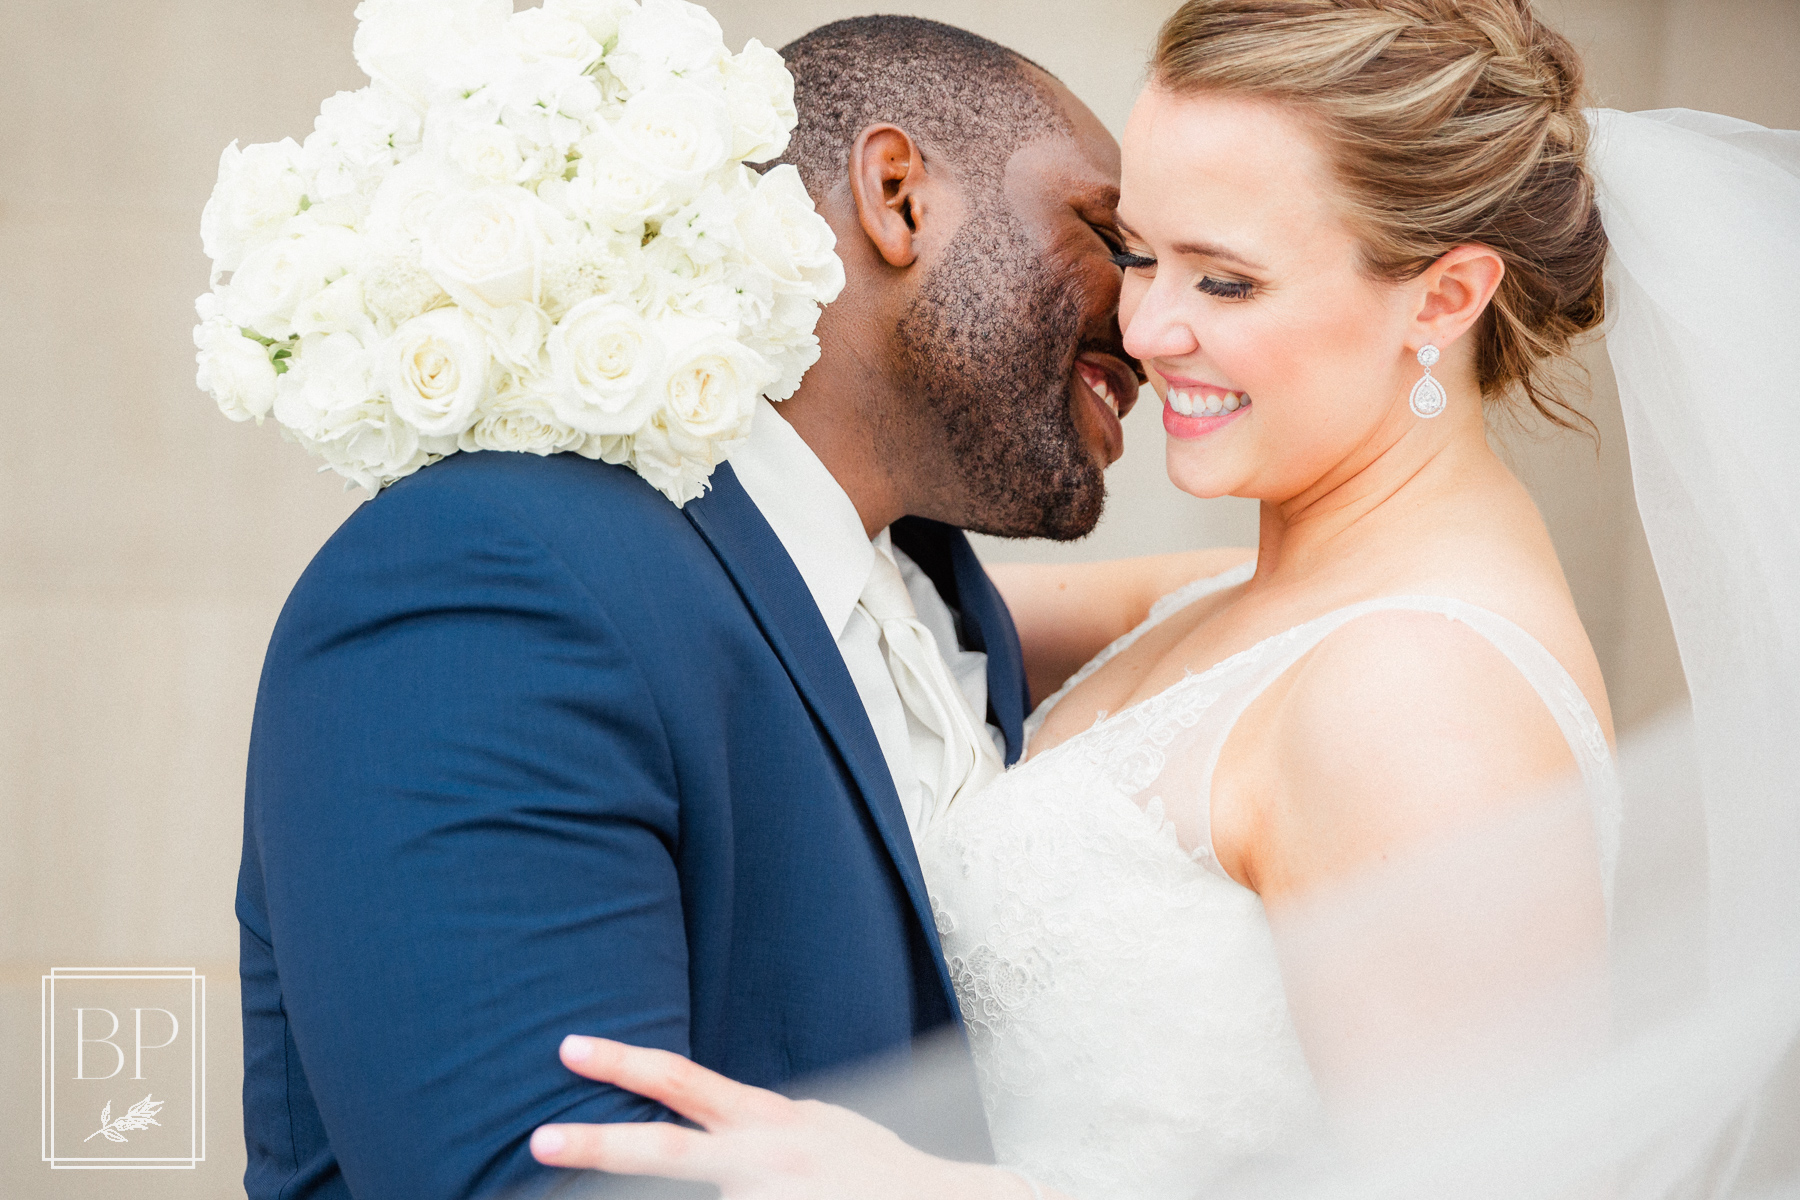 interracial couple portrait on their wedding day